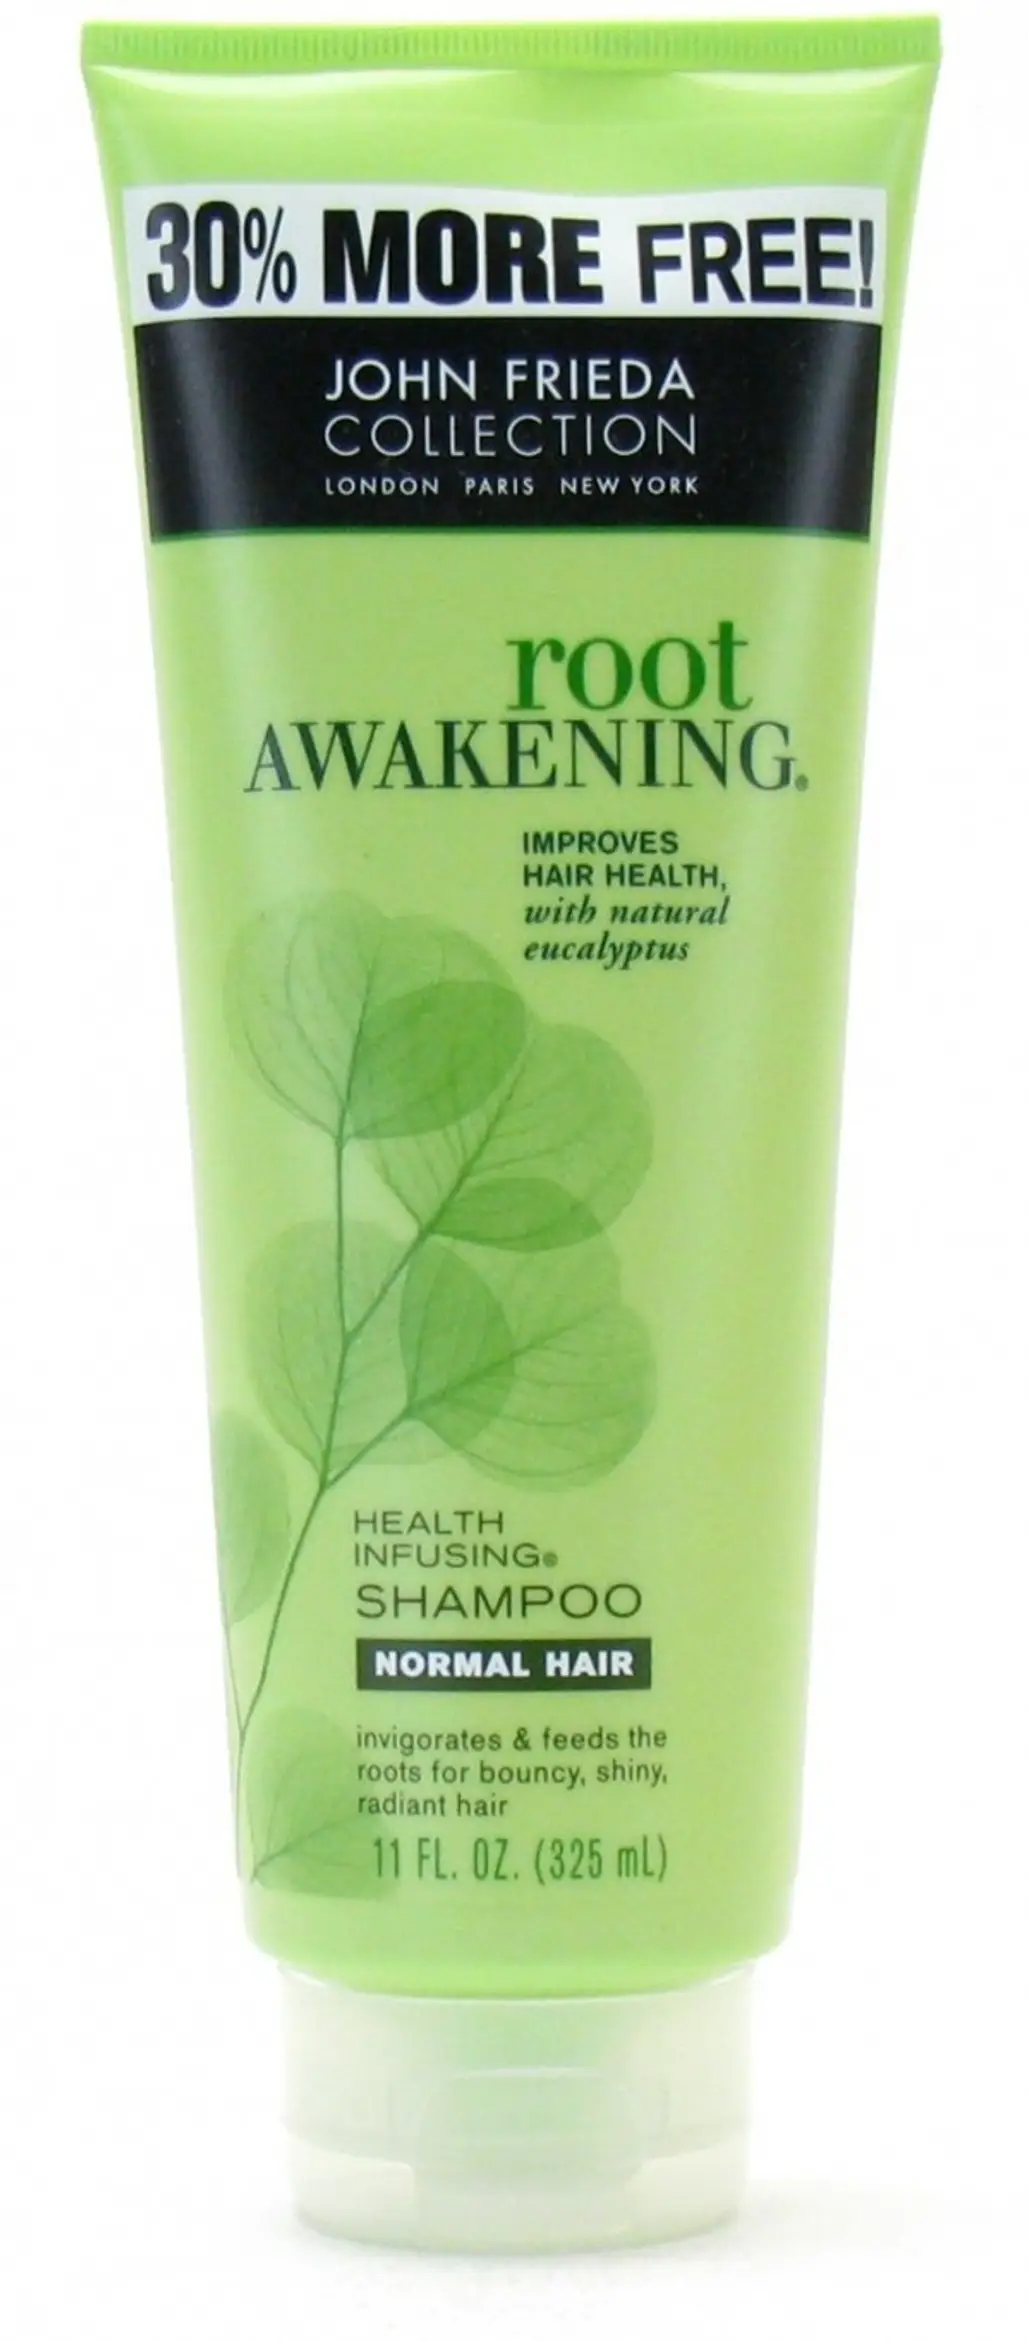 John Frieda Root Awakening Health Infusing Shampoo, Normal Hair